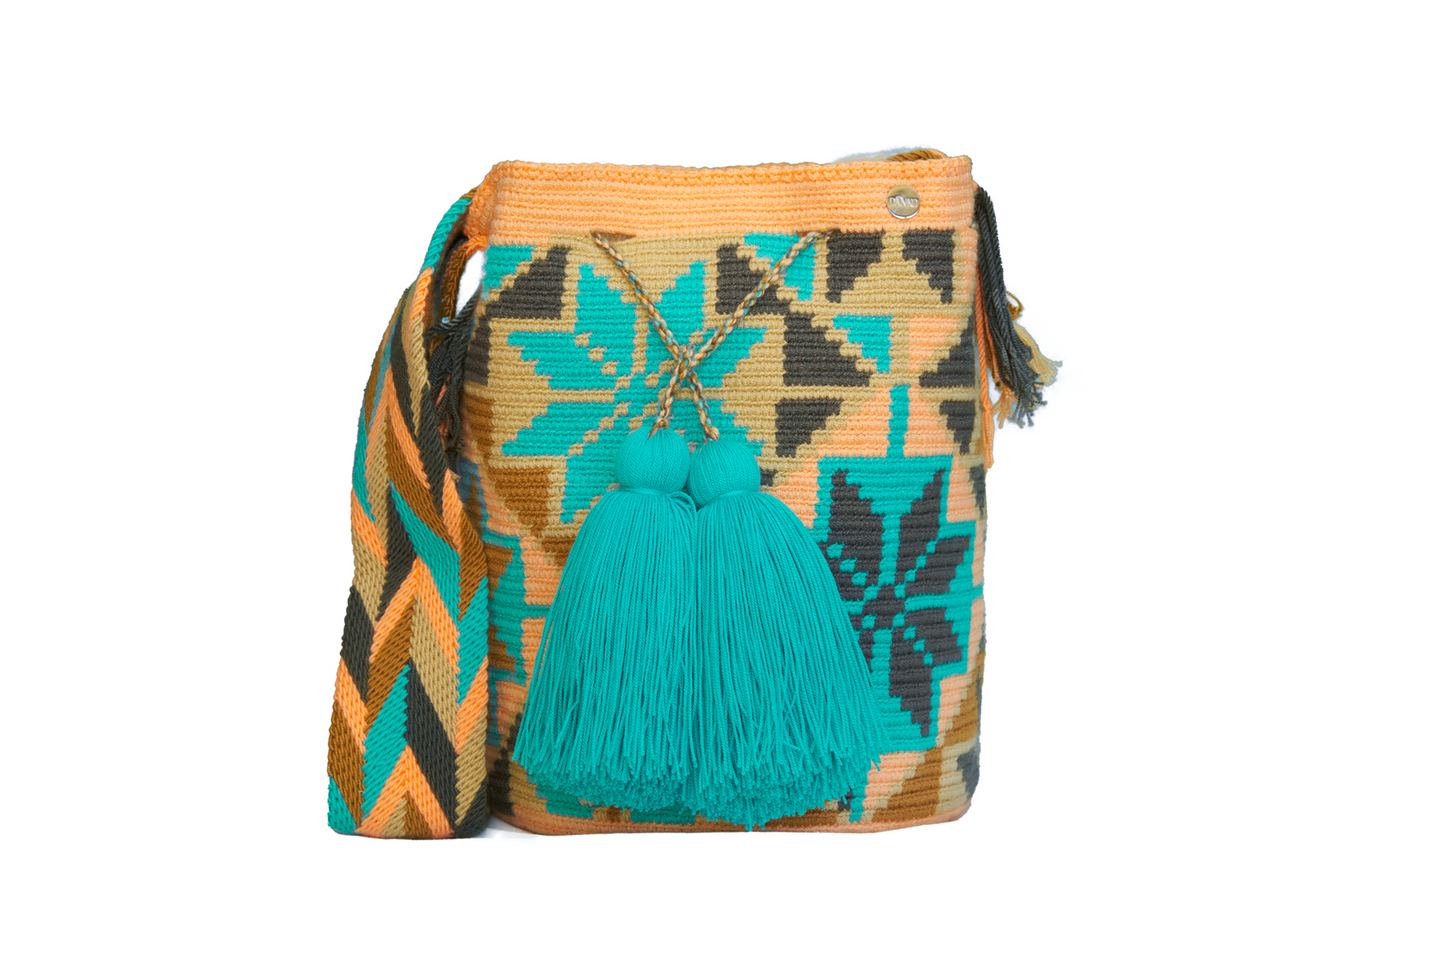 Pink and Blue Snowflake Wayuu Bag, the handbag also has two tassels